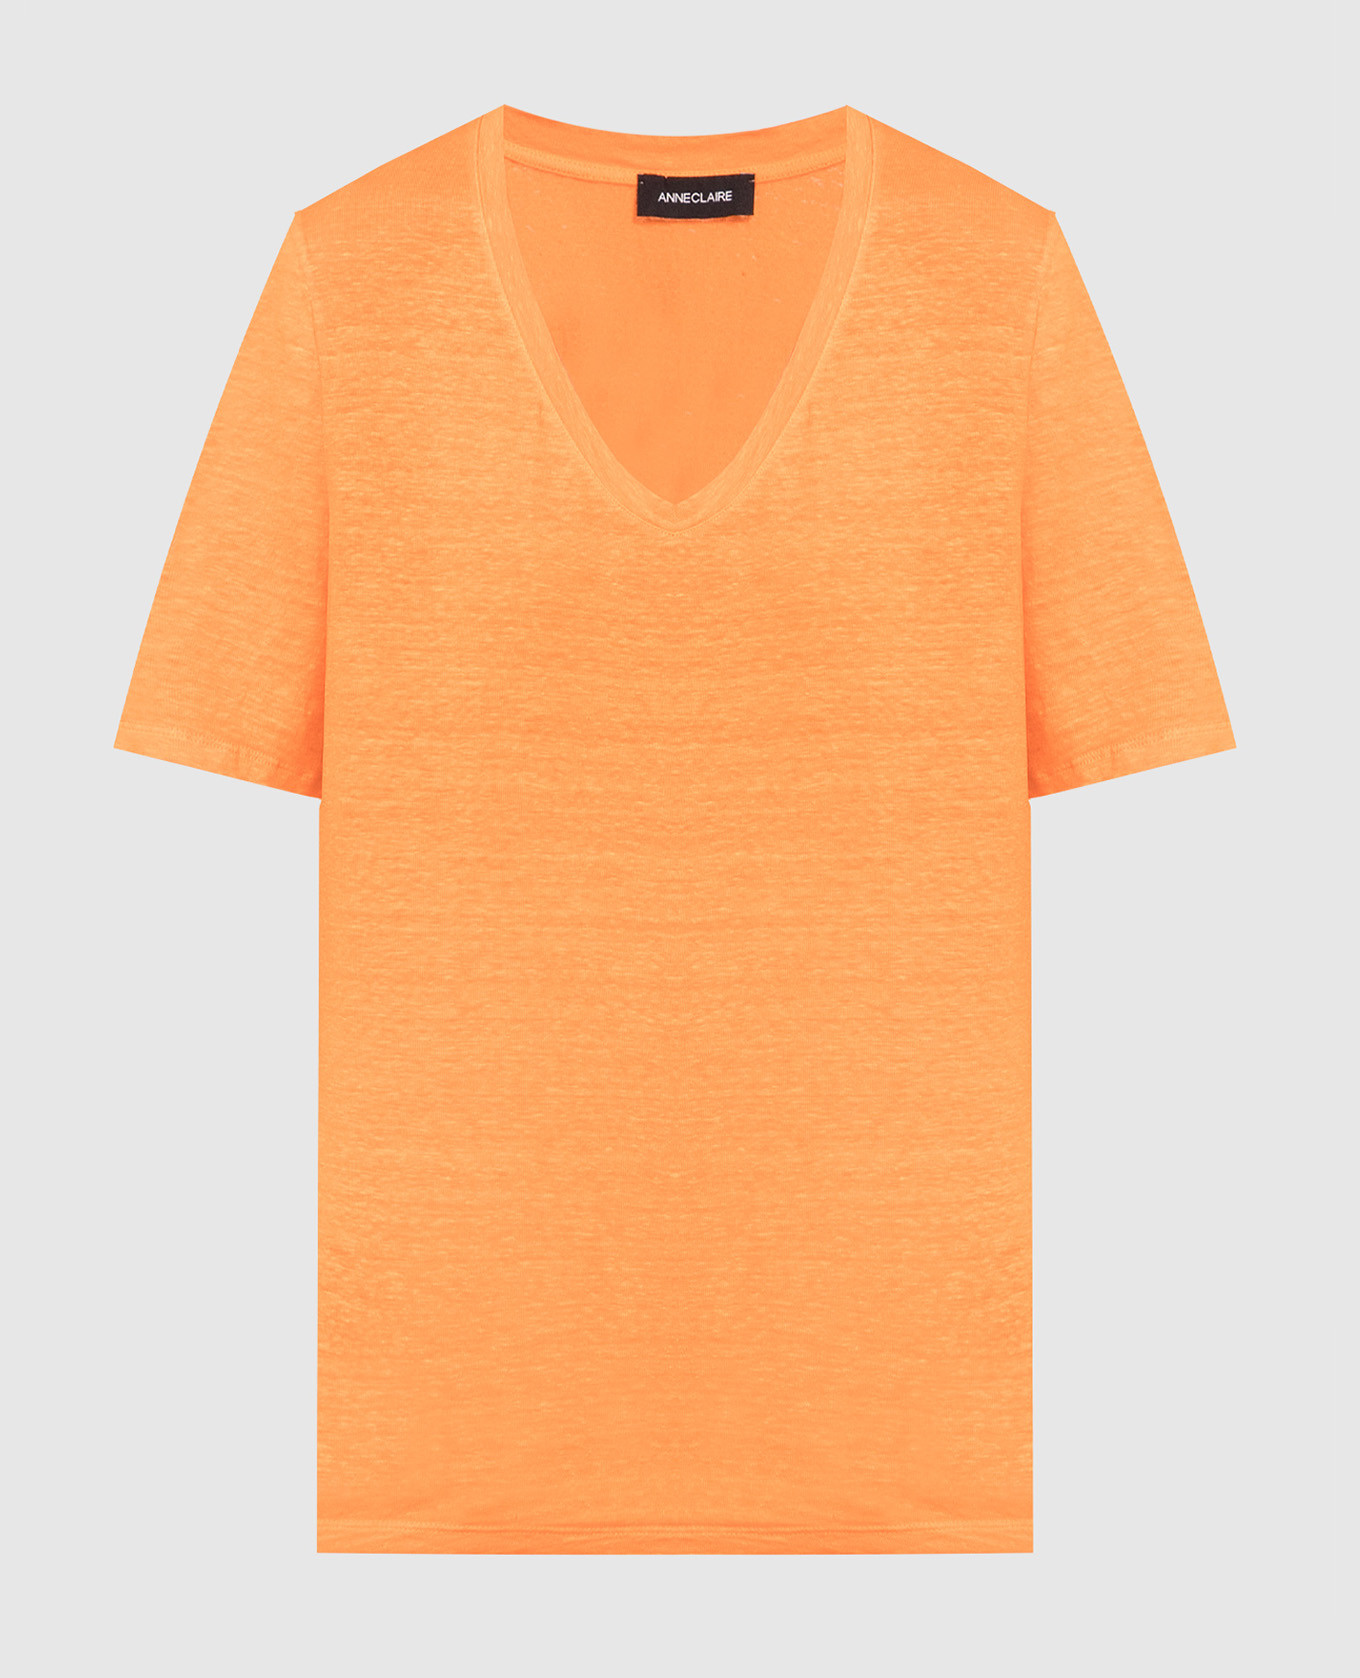 Orange linen t-shirt